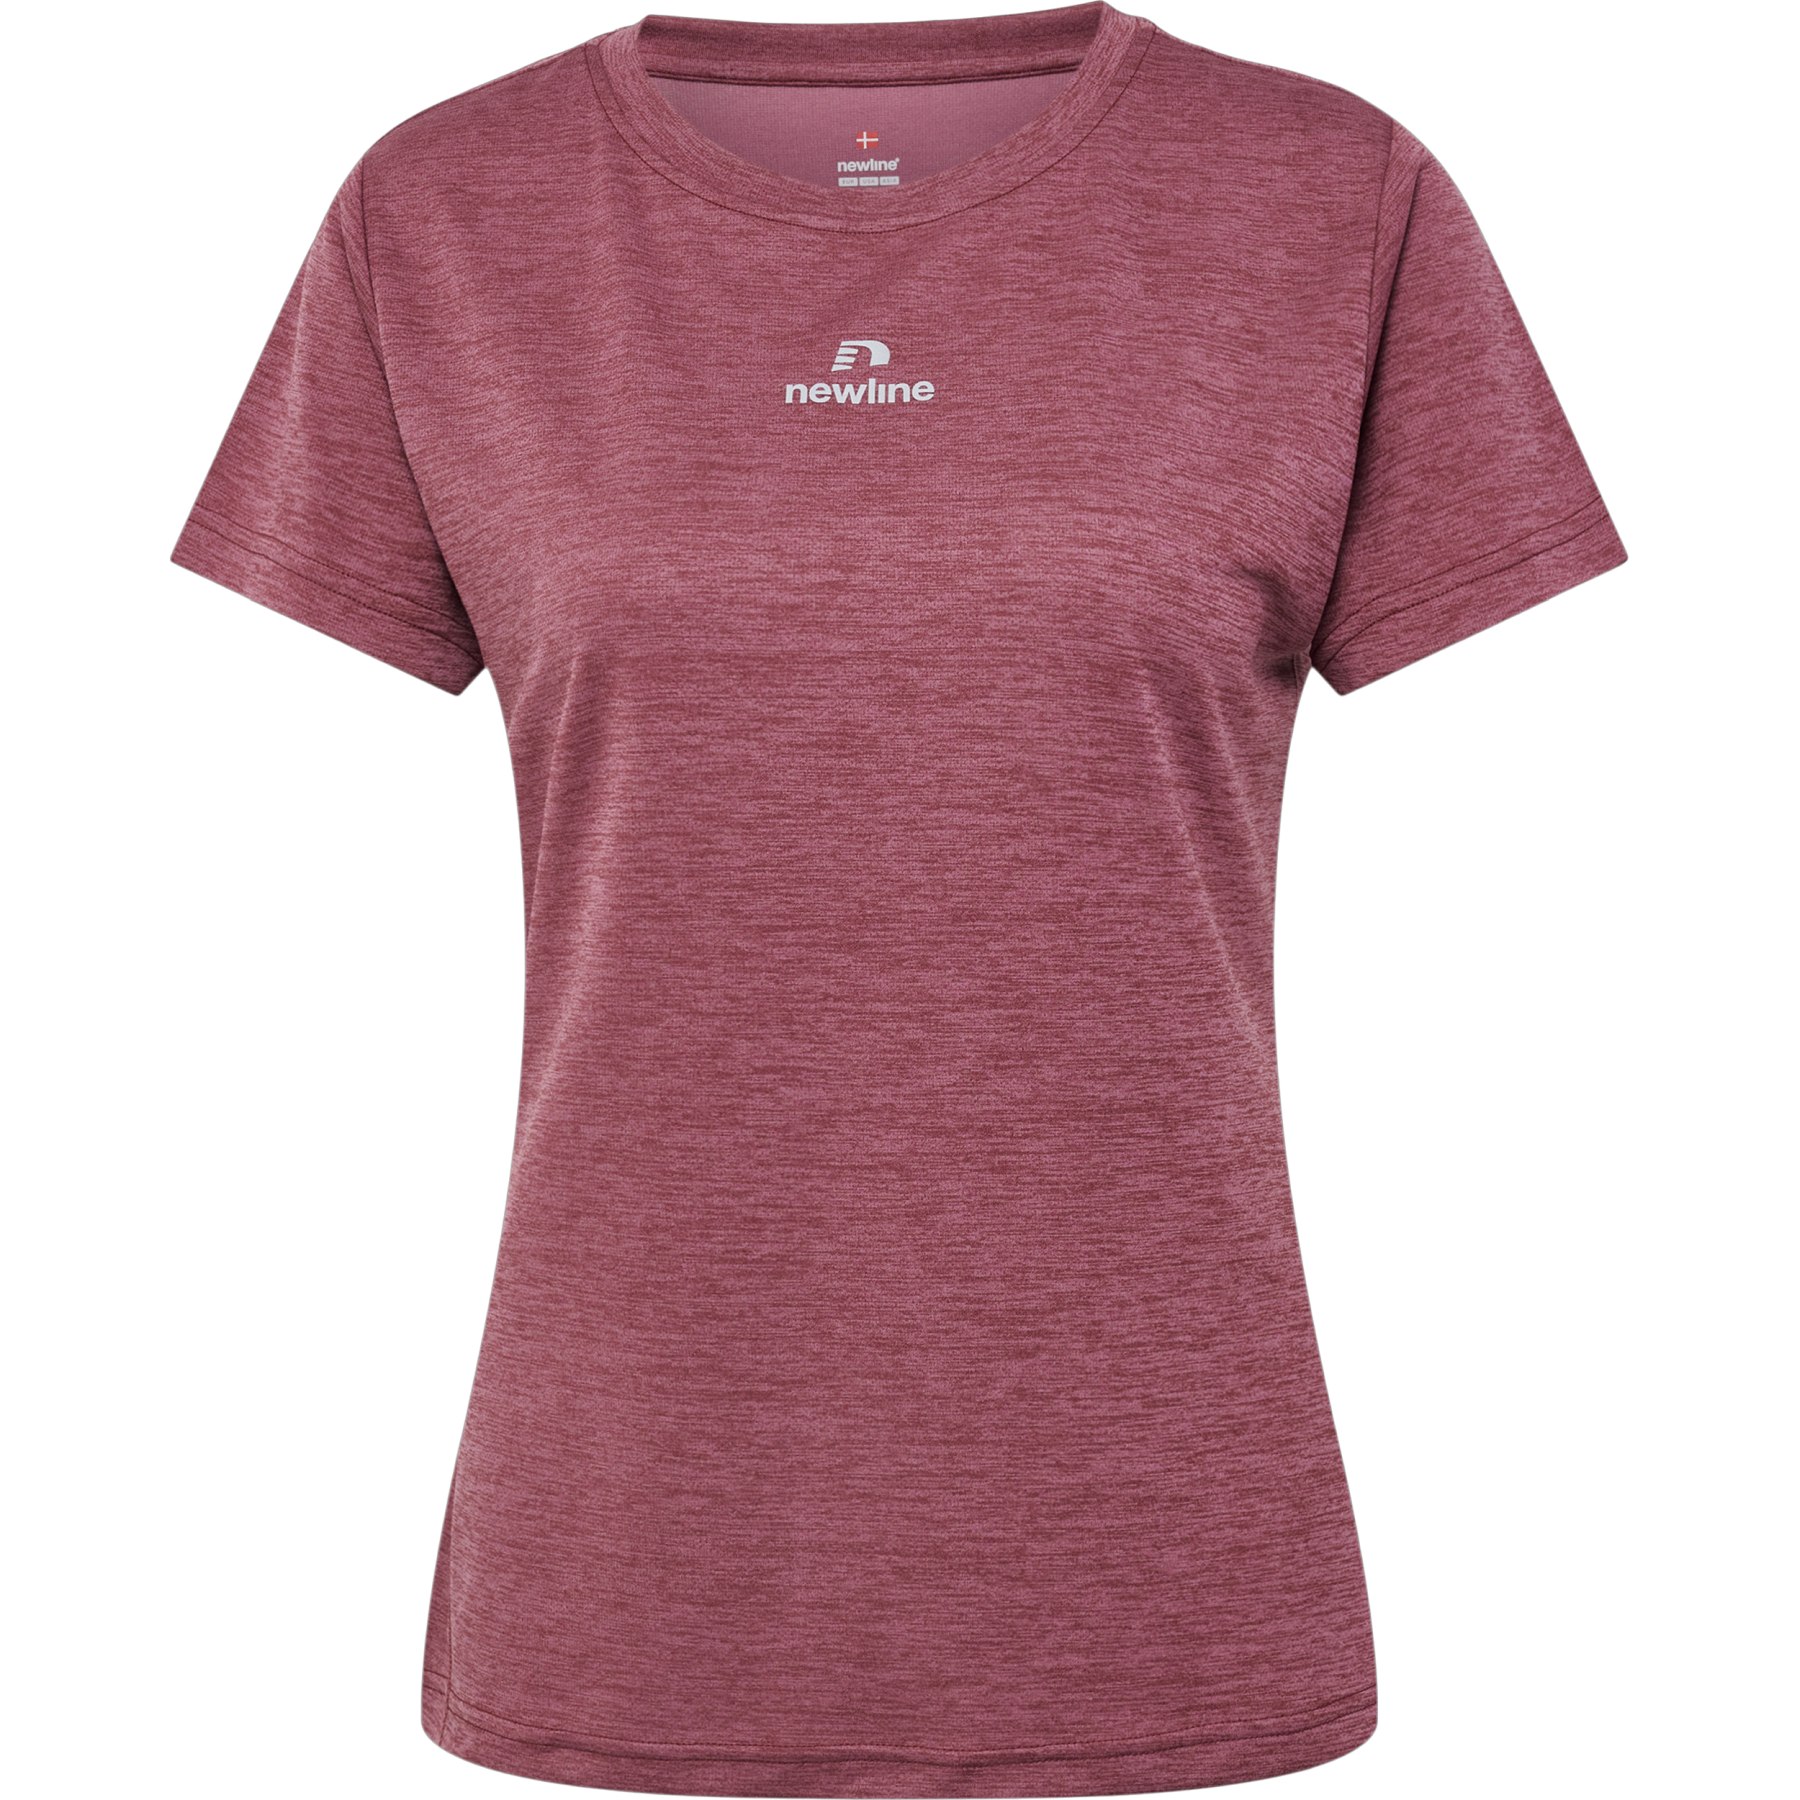 Productfoto van Newline Pace Melange T-Shirt Dames - maroon melange